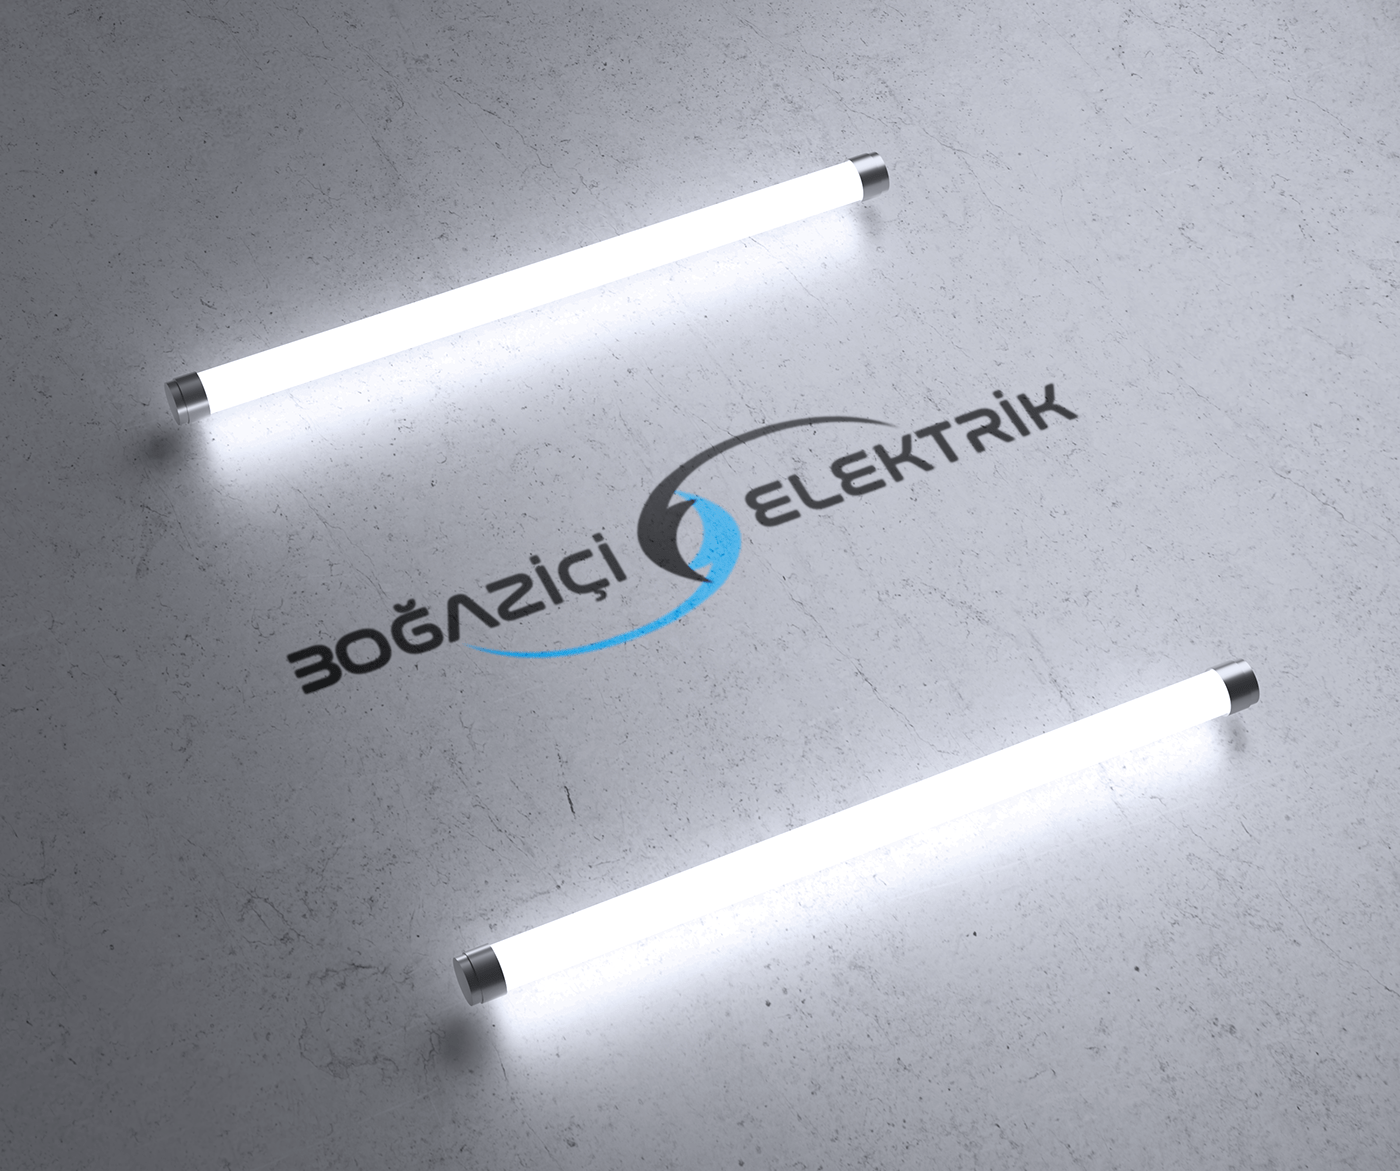 Electrical Engineering electronic led Lighting Design  logo